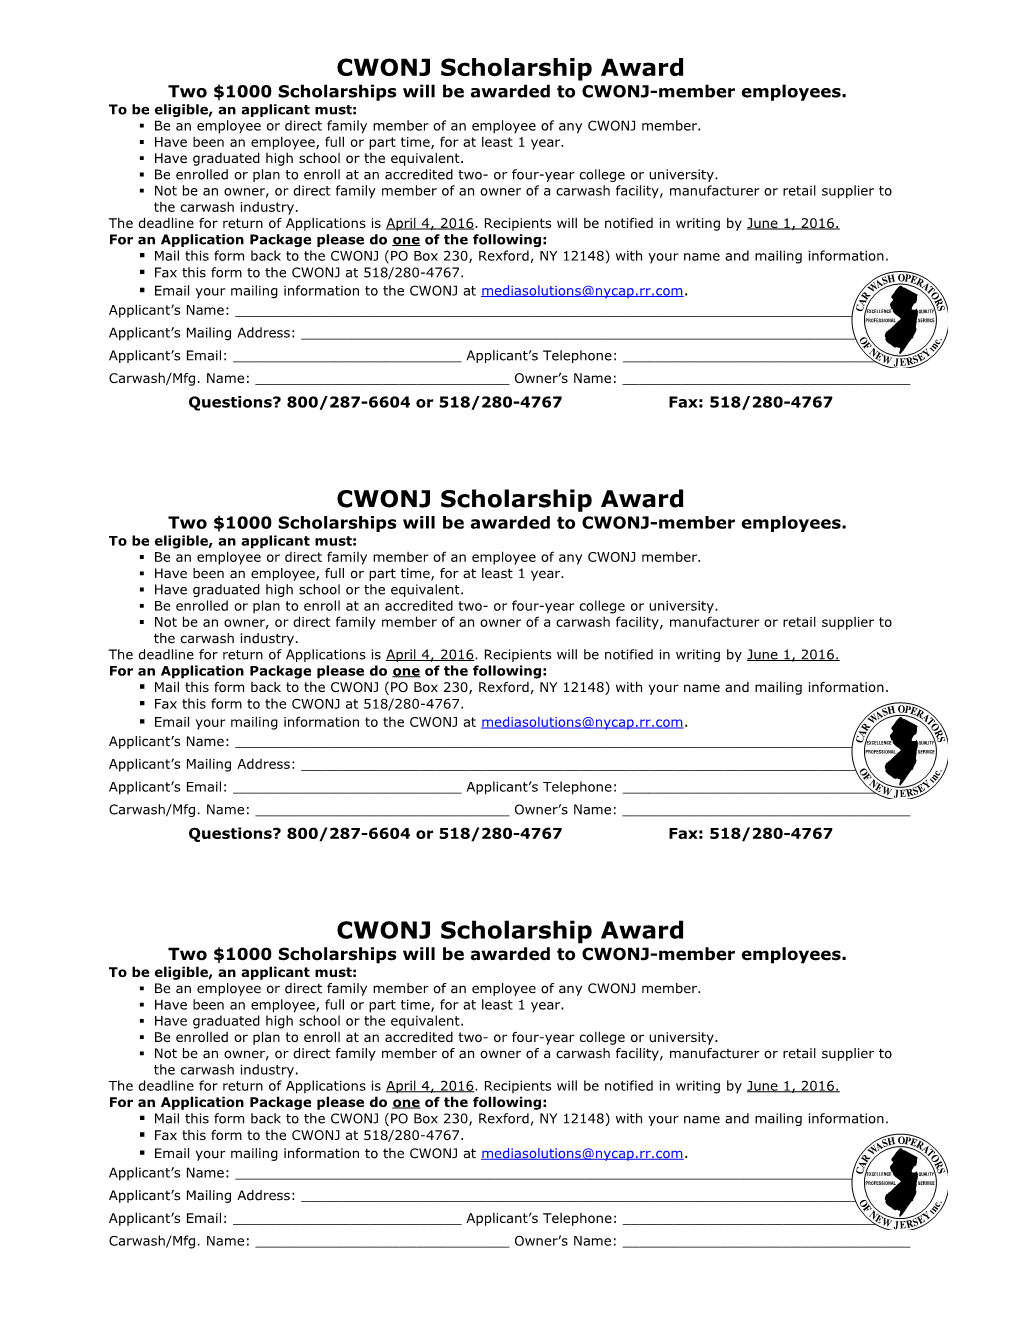 The Connecticut Car Wash Association Scholarship Award